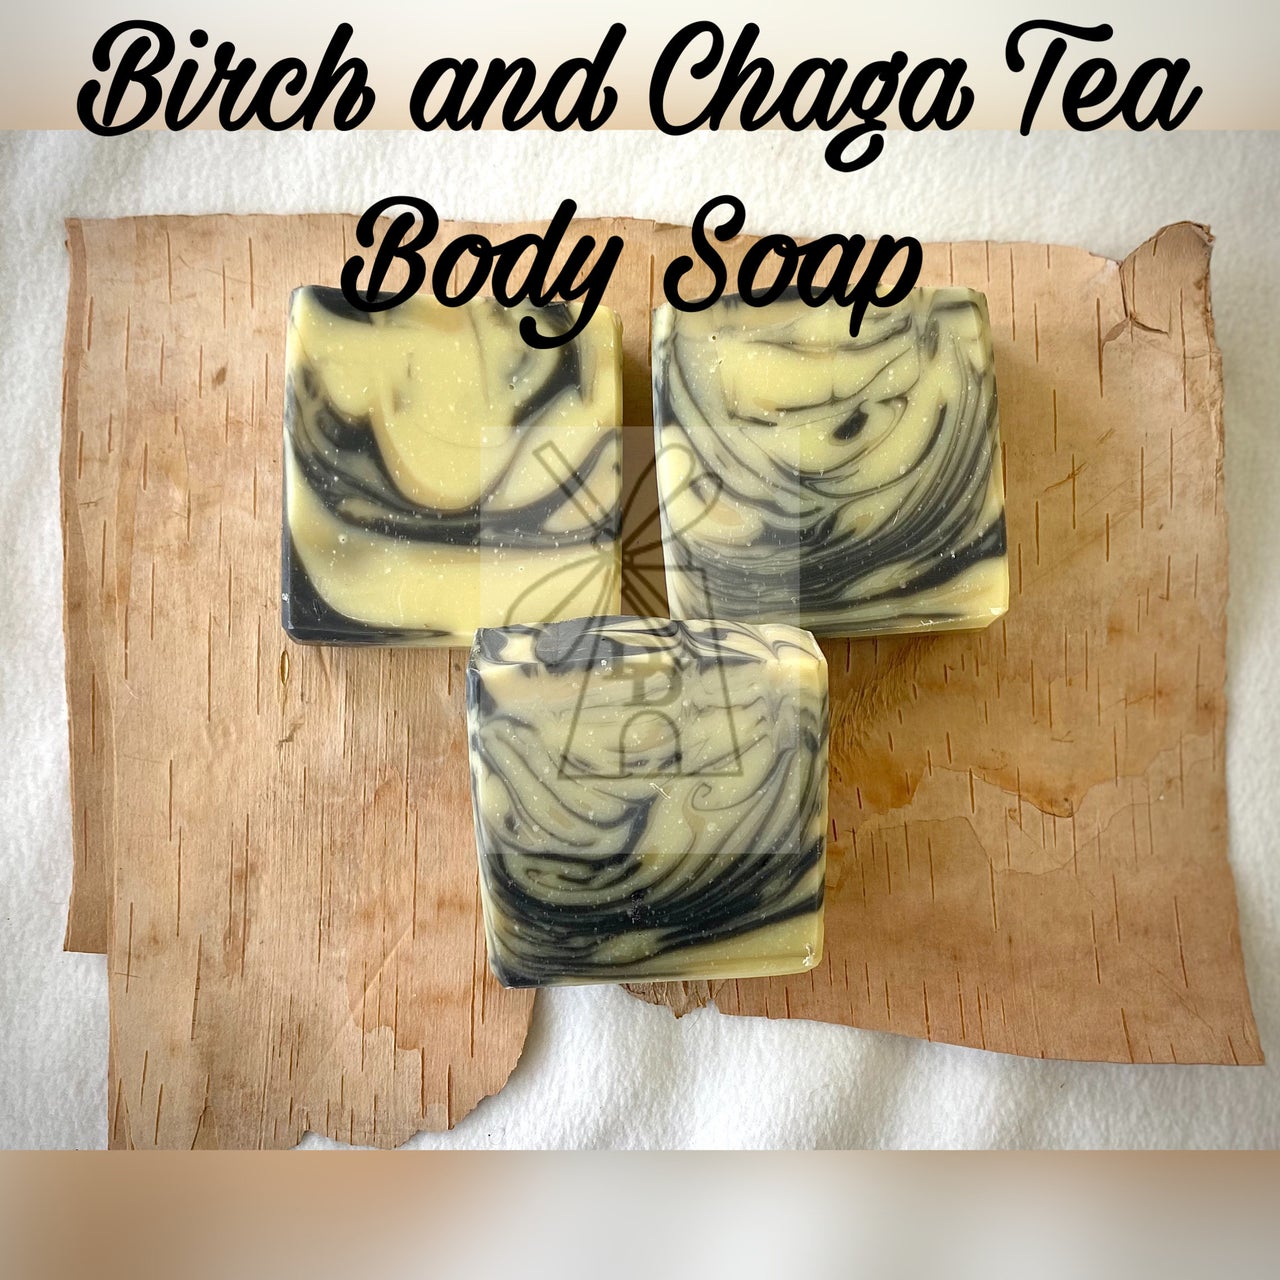 Birch and Chaga Tea - Body Soap